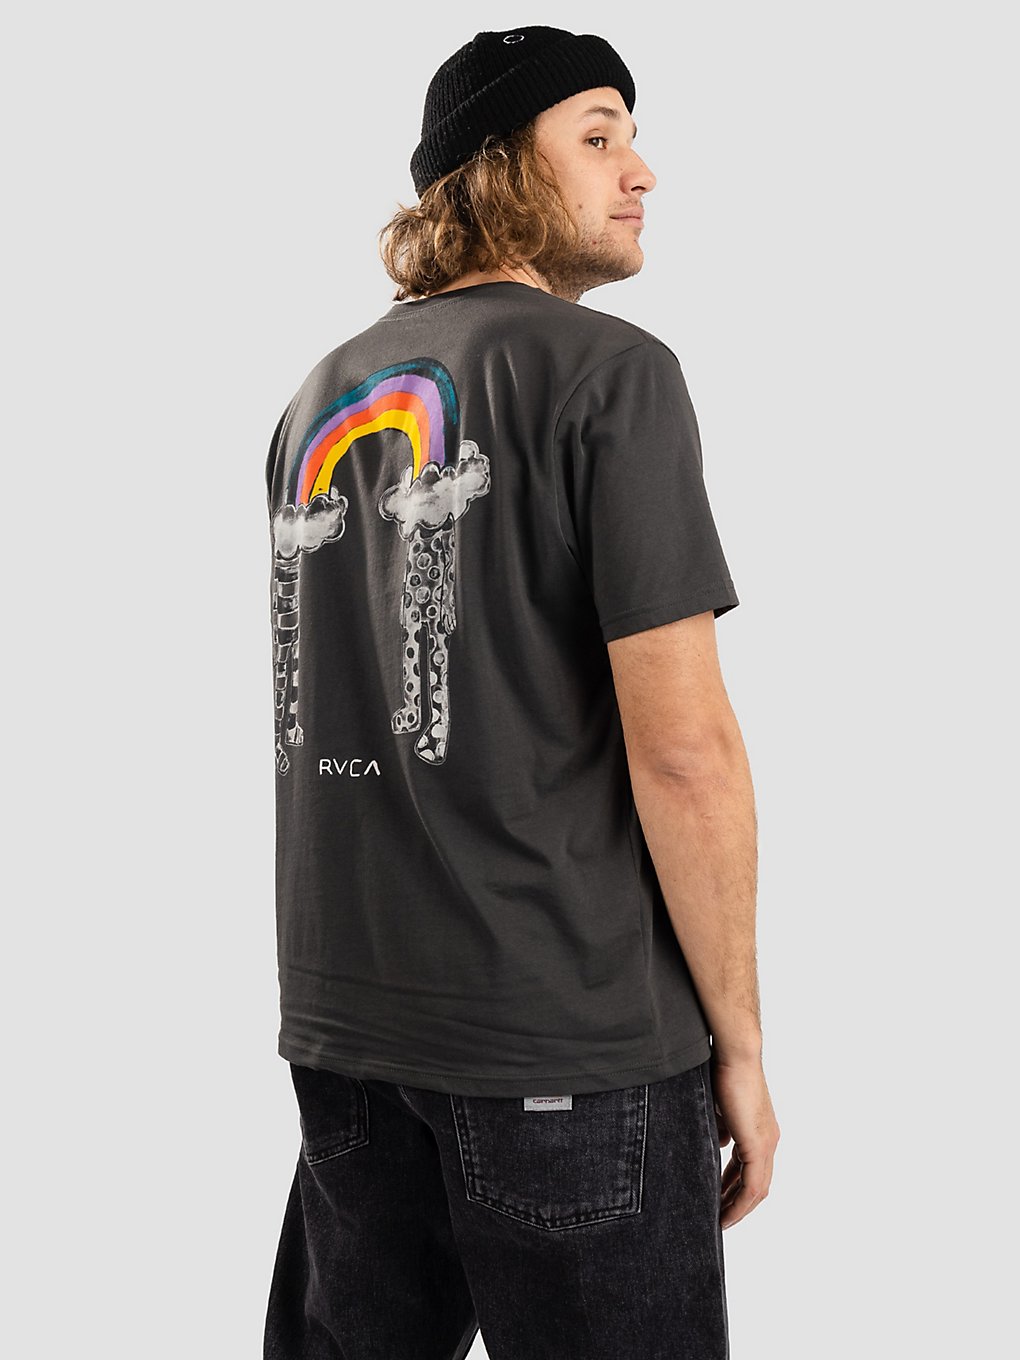 RVCA Rainbow Connection T-Shirt pirate black kaufen